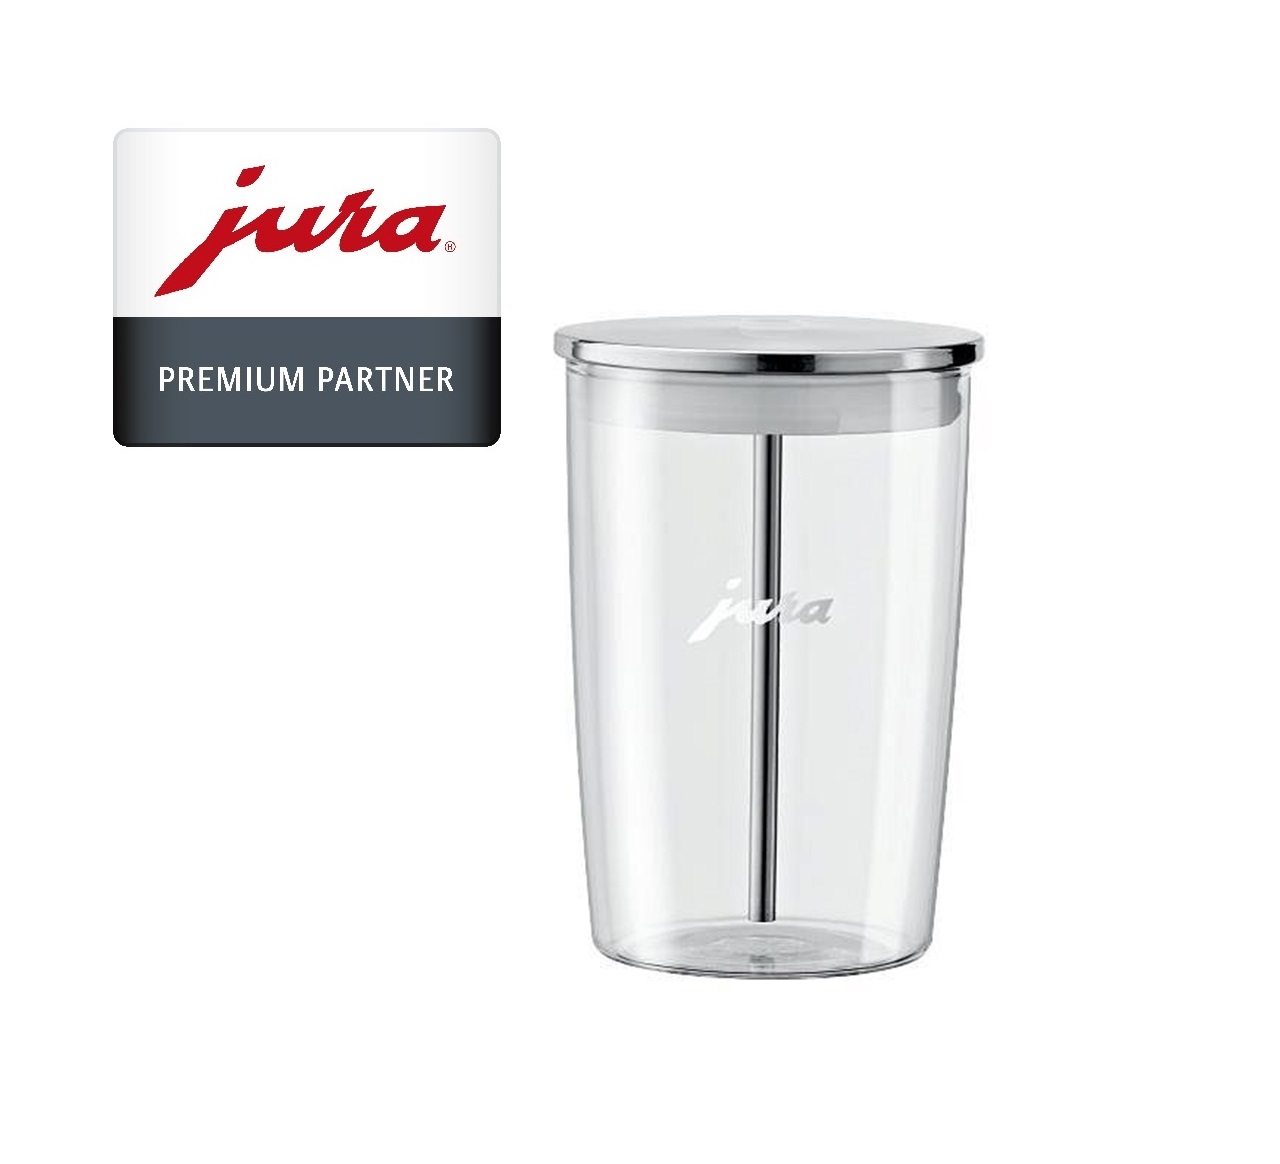 JURA Szklany pojemnik na mleko 0,5L